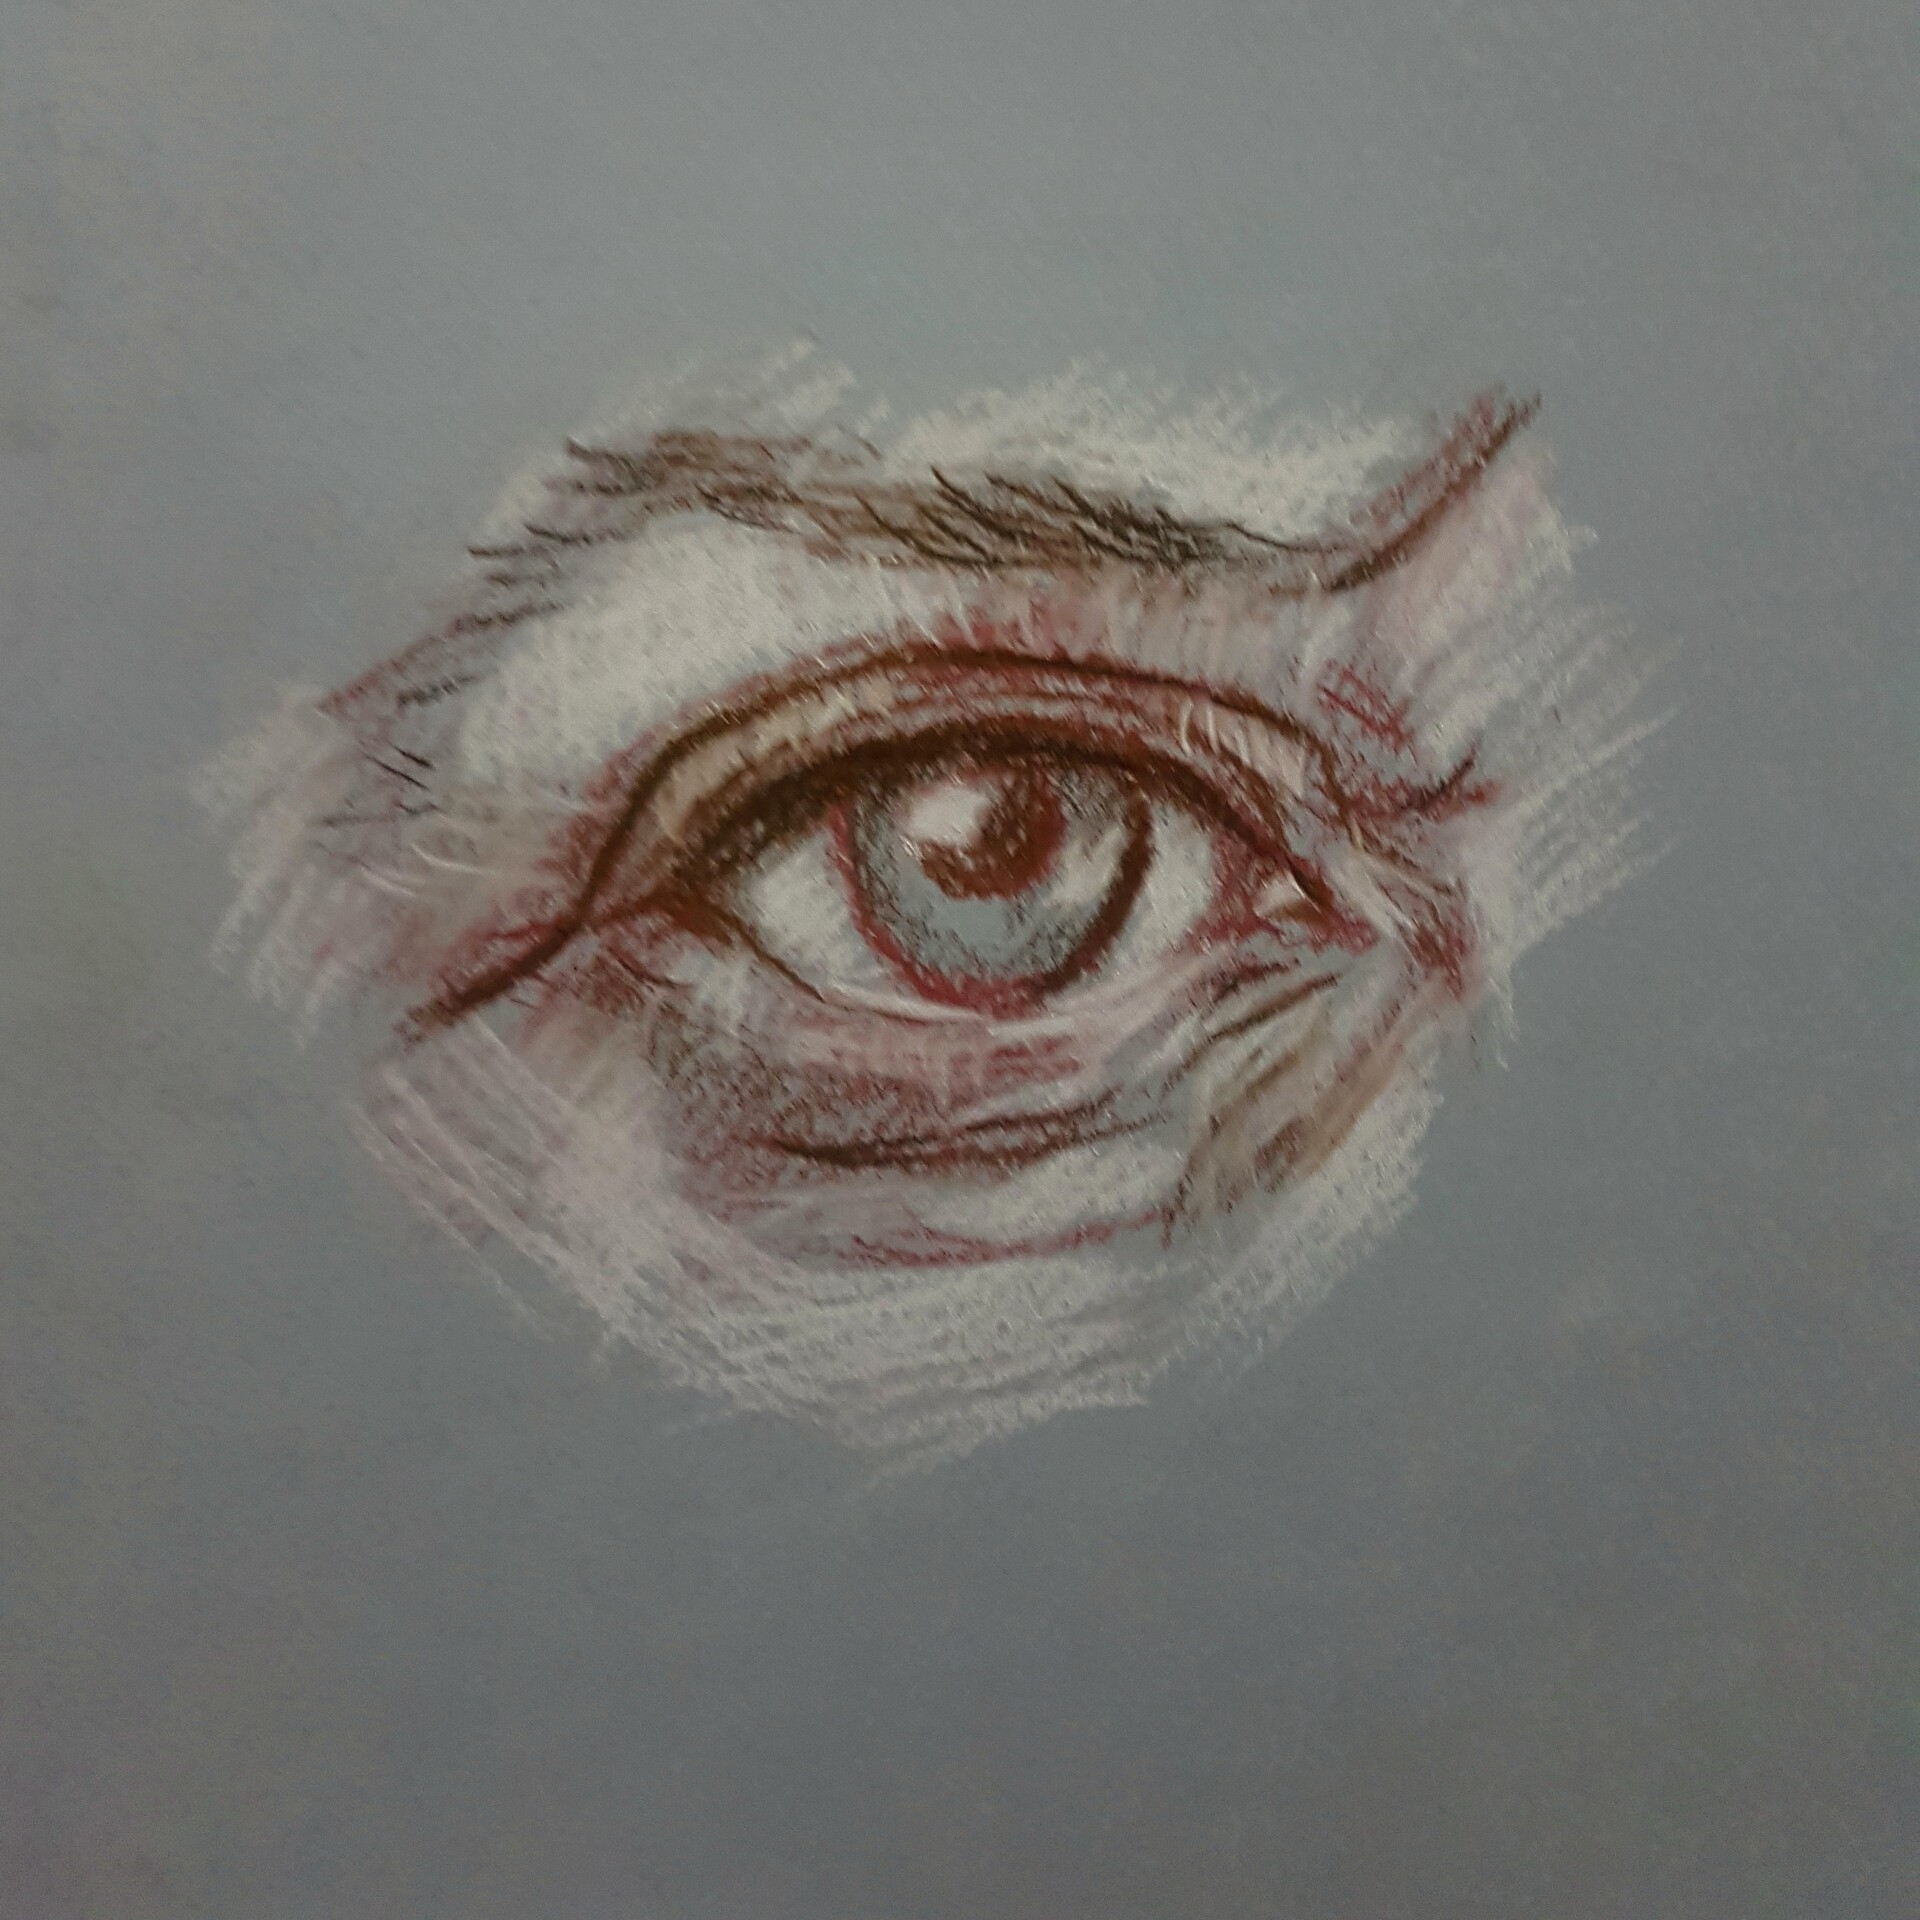 ArtStation - Quick eye sketch on paper